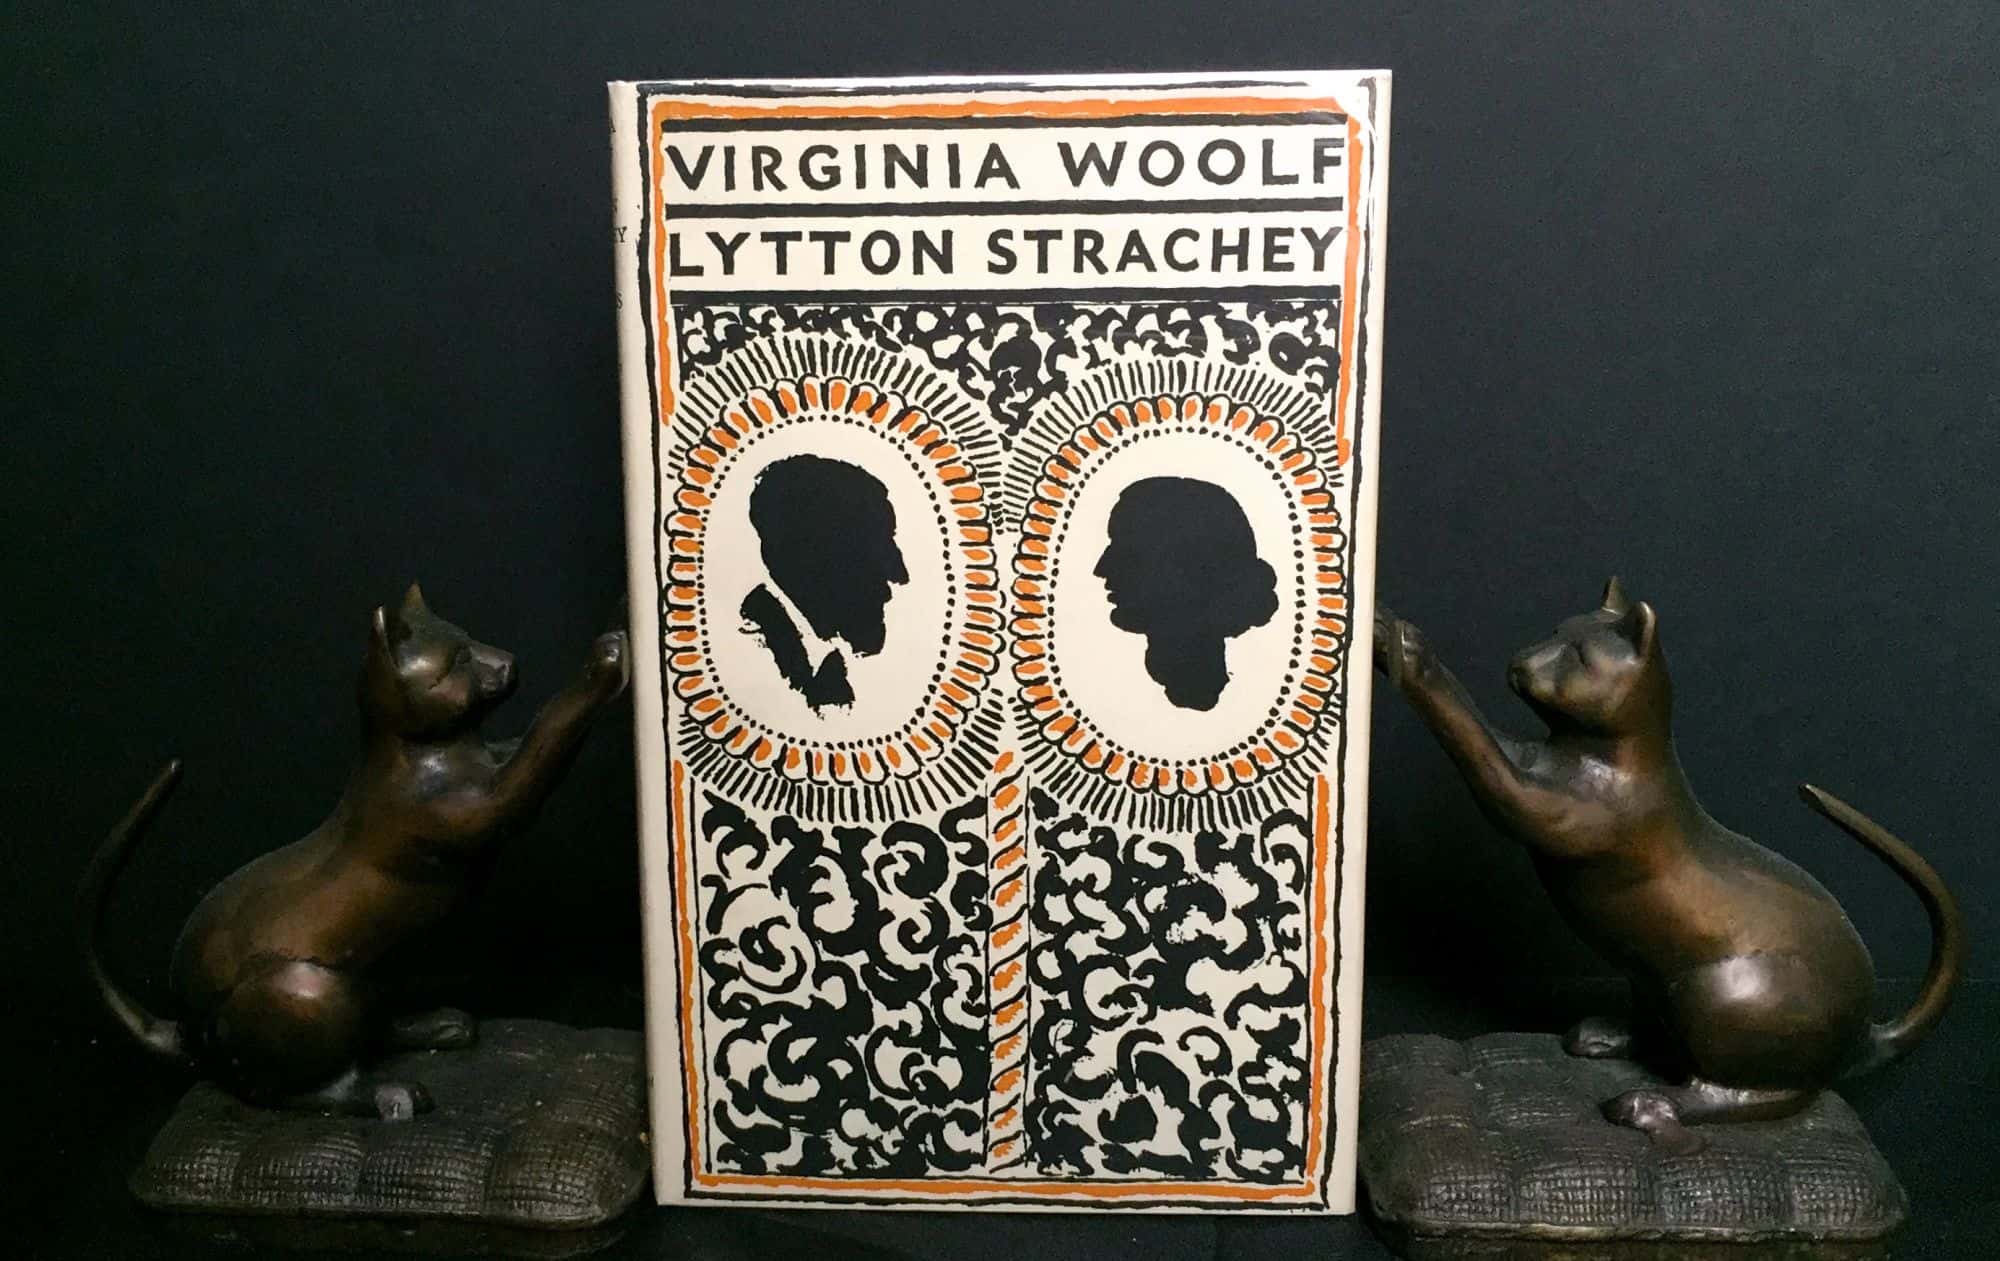 Virginia Woolf facts